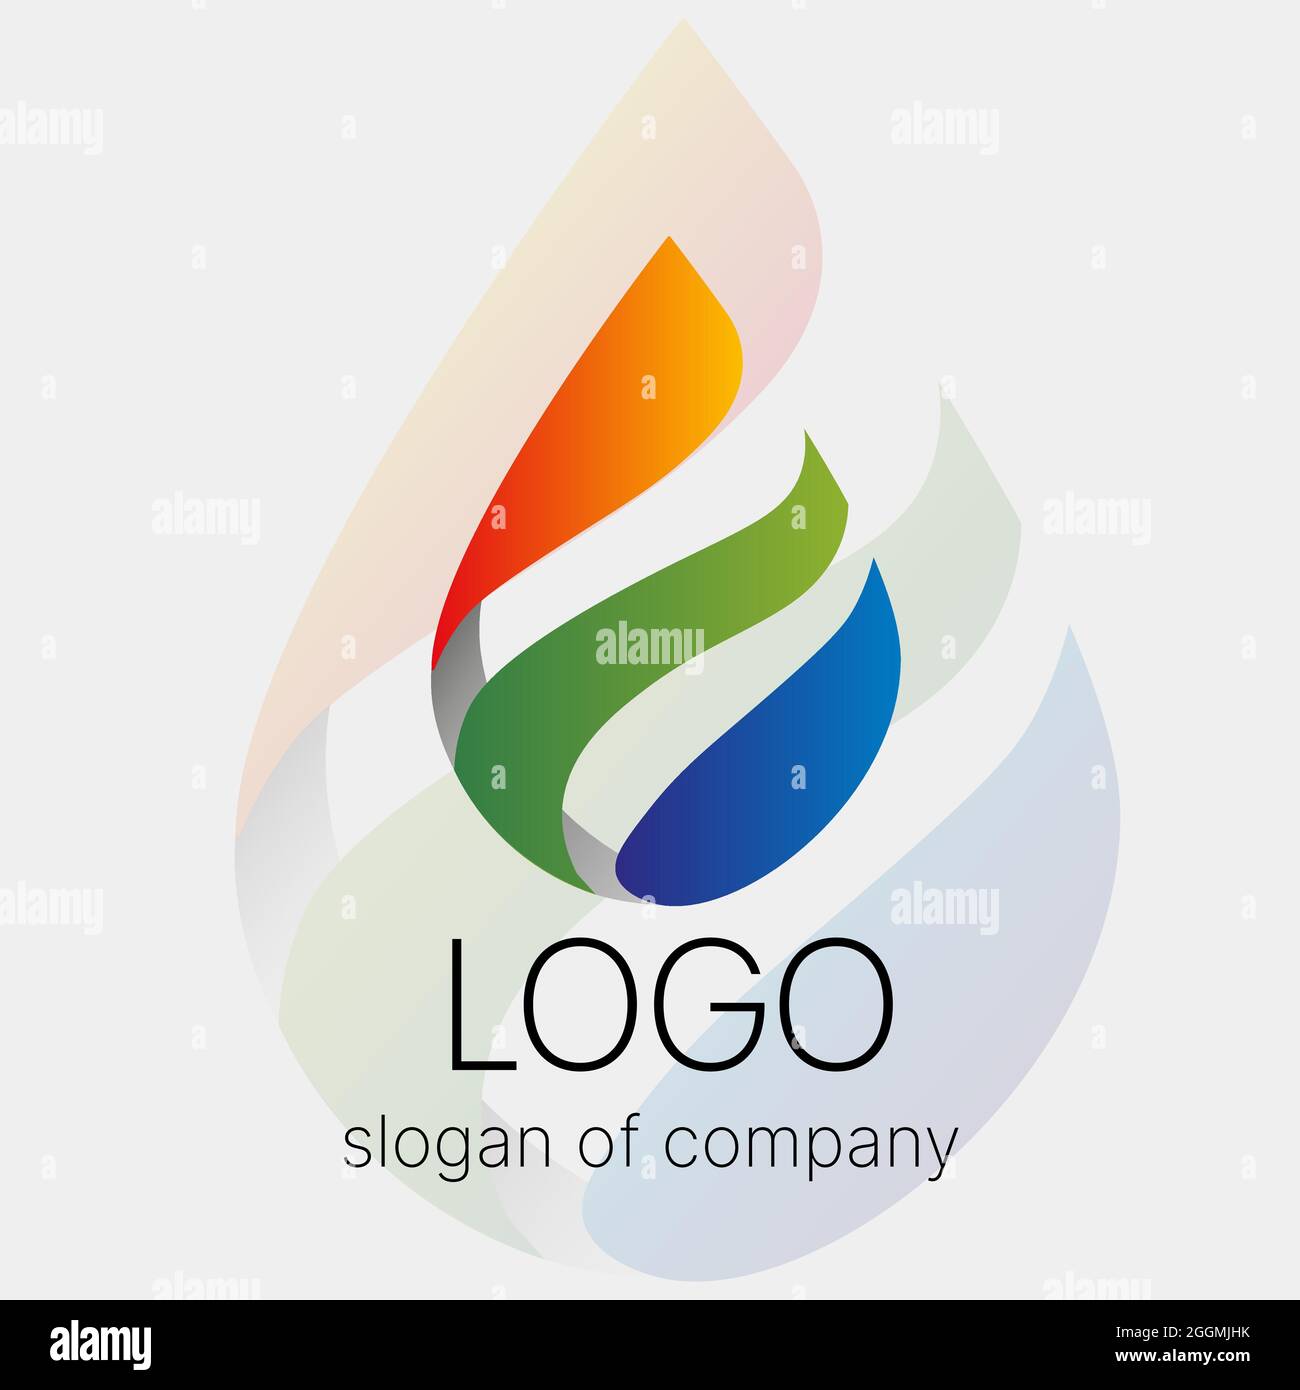 8,349 Mm Logo Design Images, Stock Photos, 3D objects, & Vectors